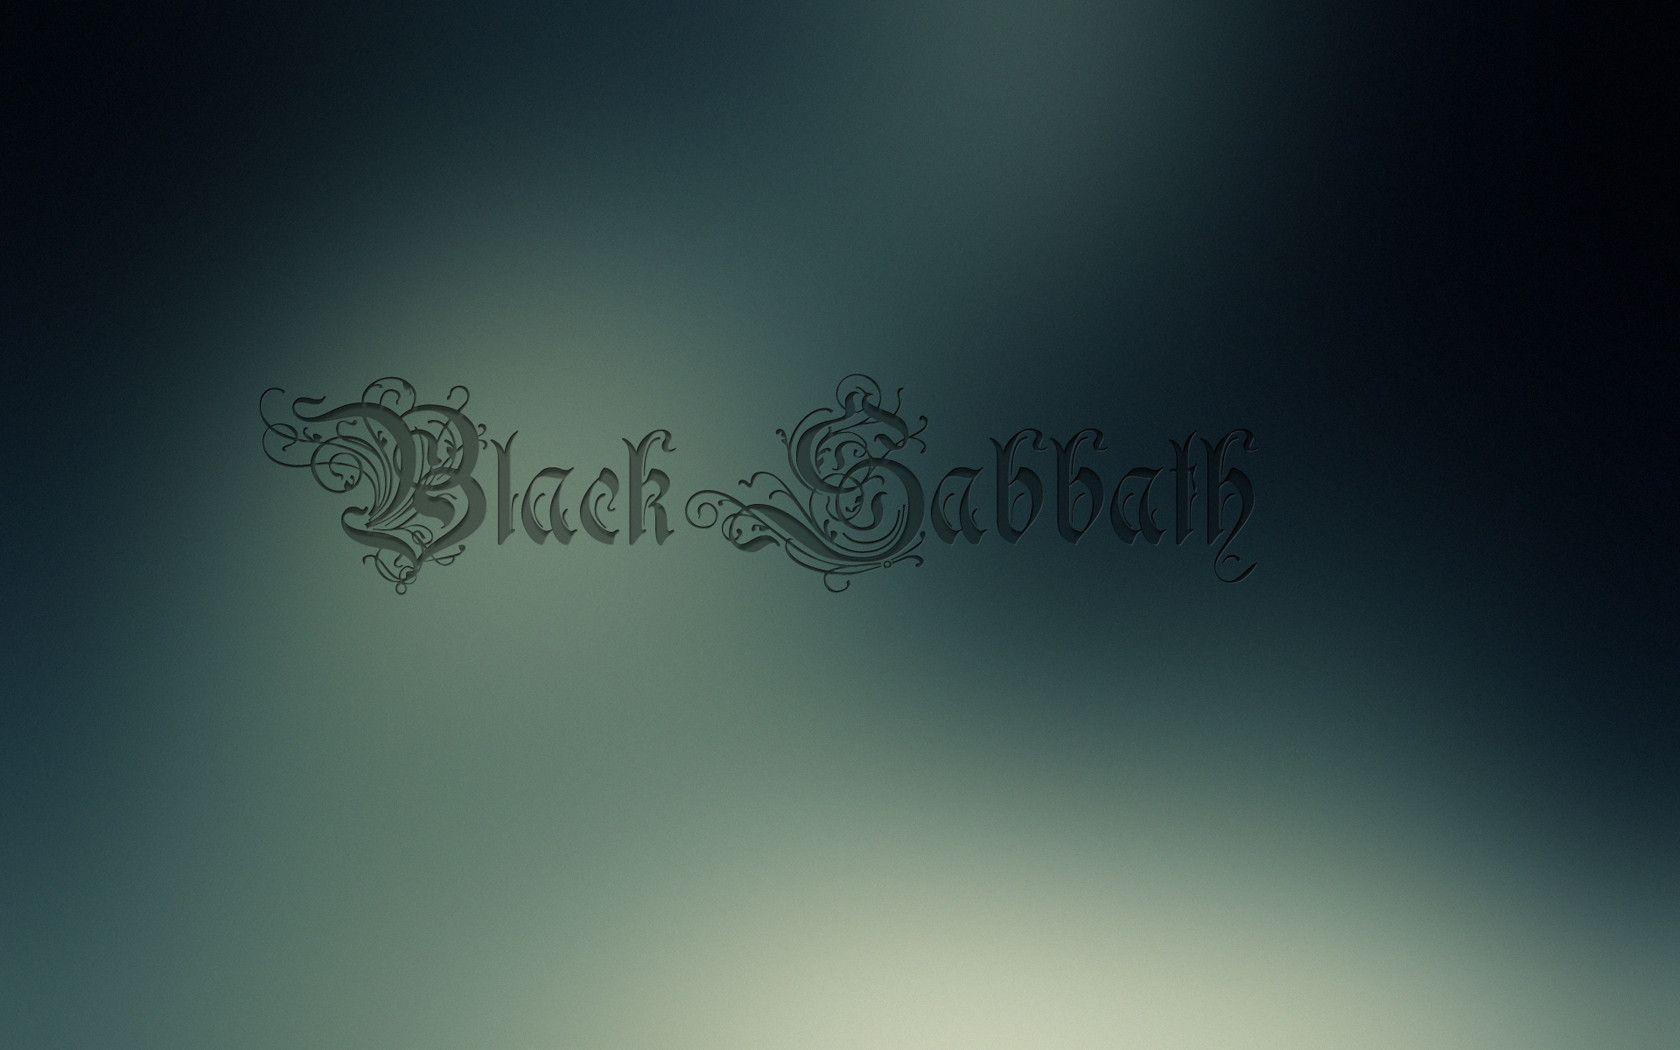 Black Sabbath Wallpaper By K Appa